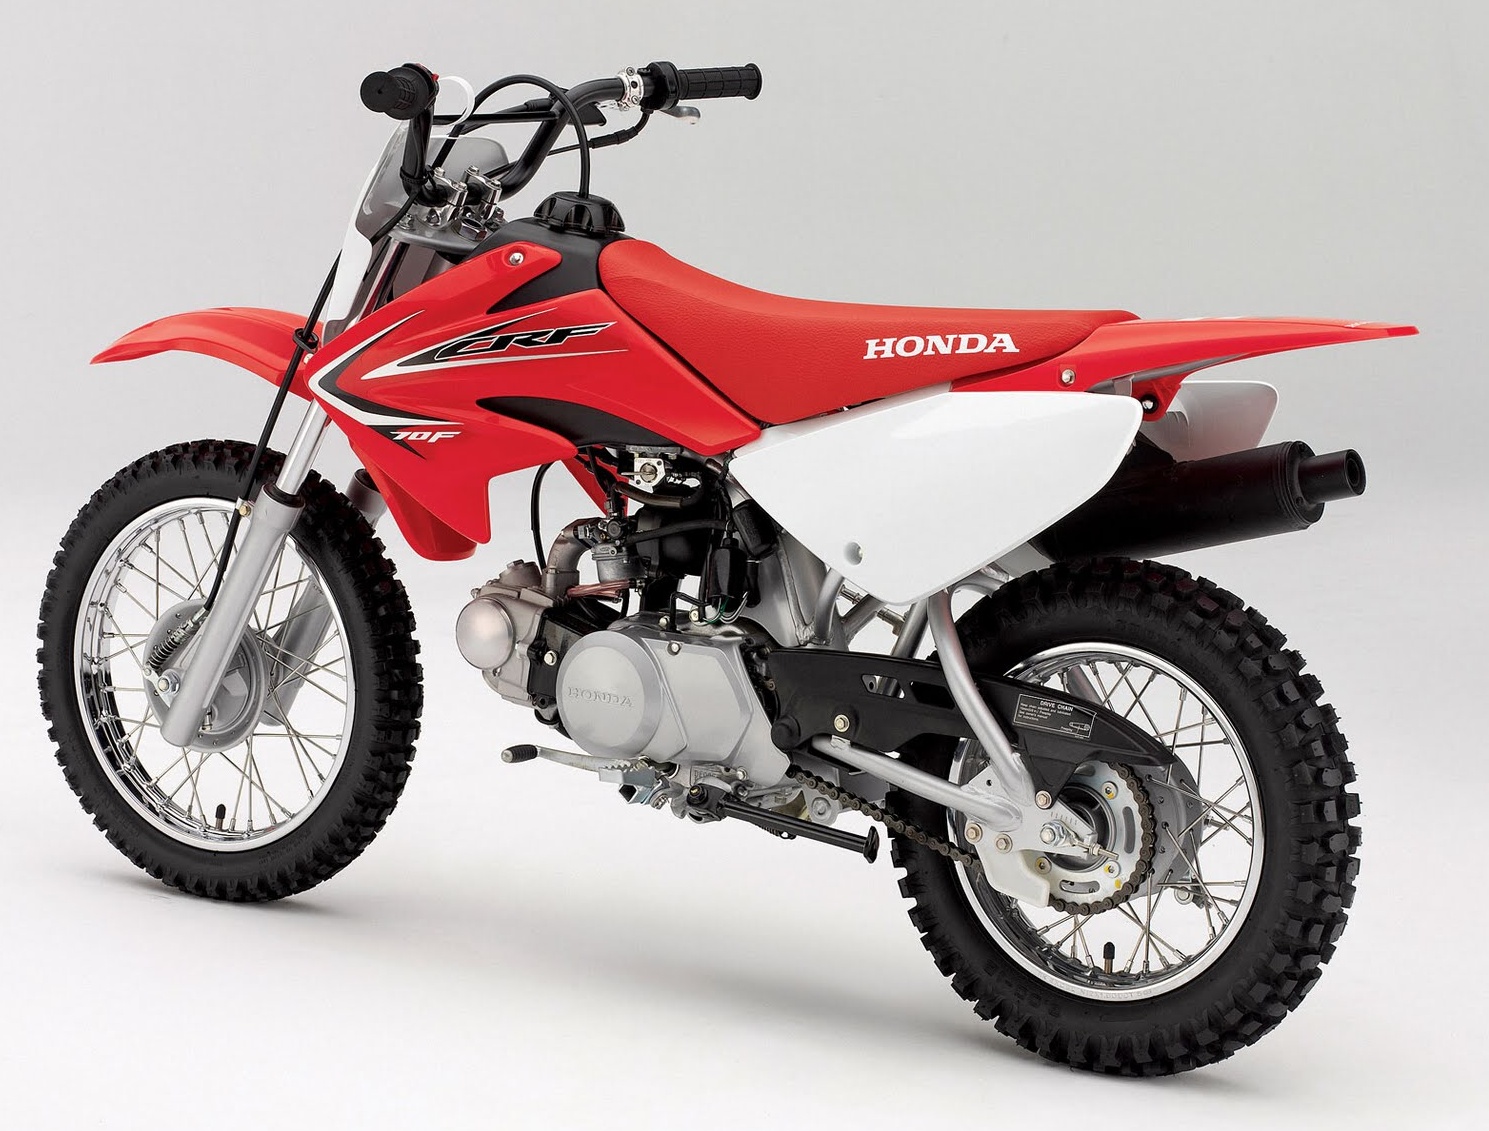 Мотоцикл Honda CRF 70 F 2012 Цена, Фото, Характеристики